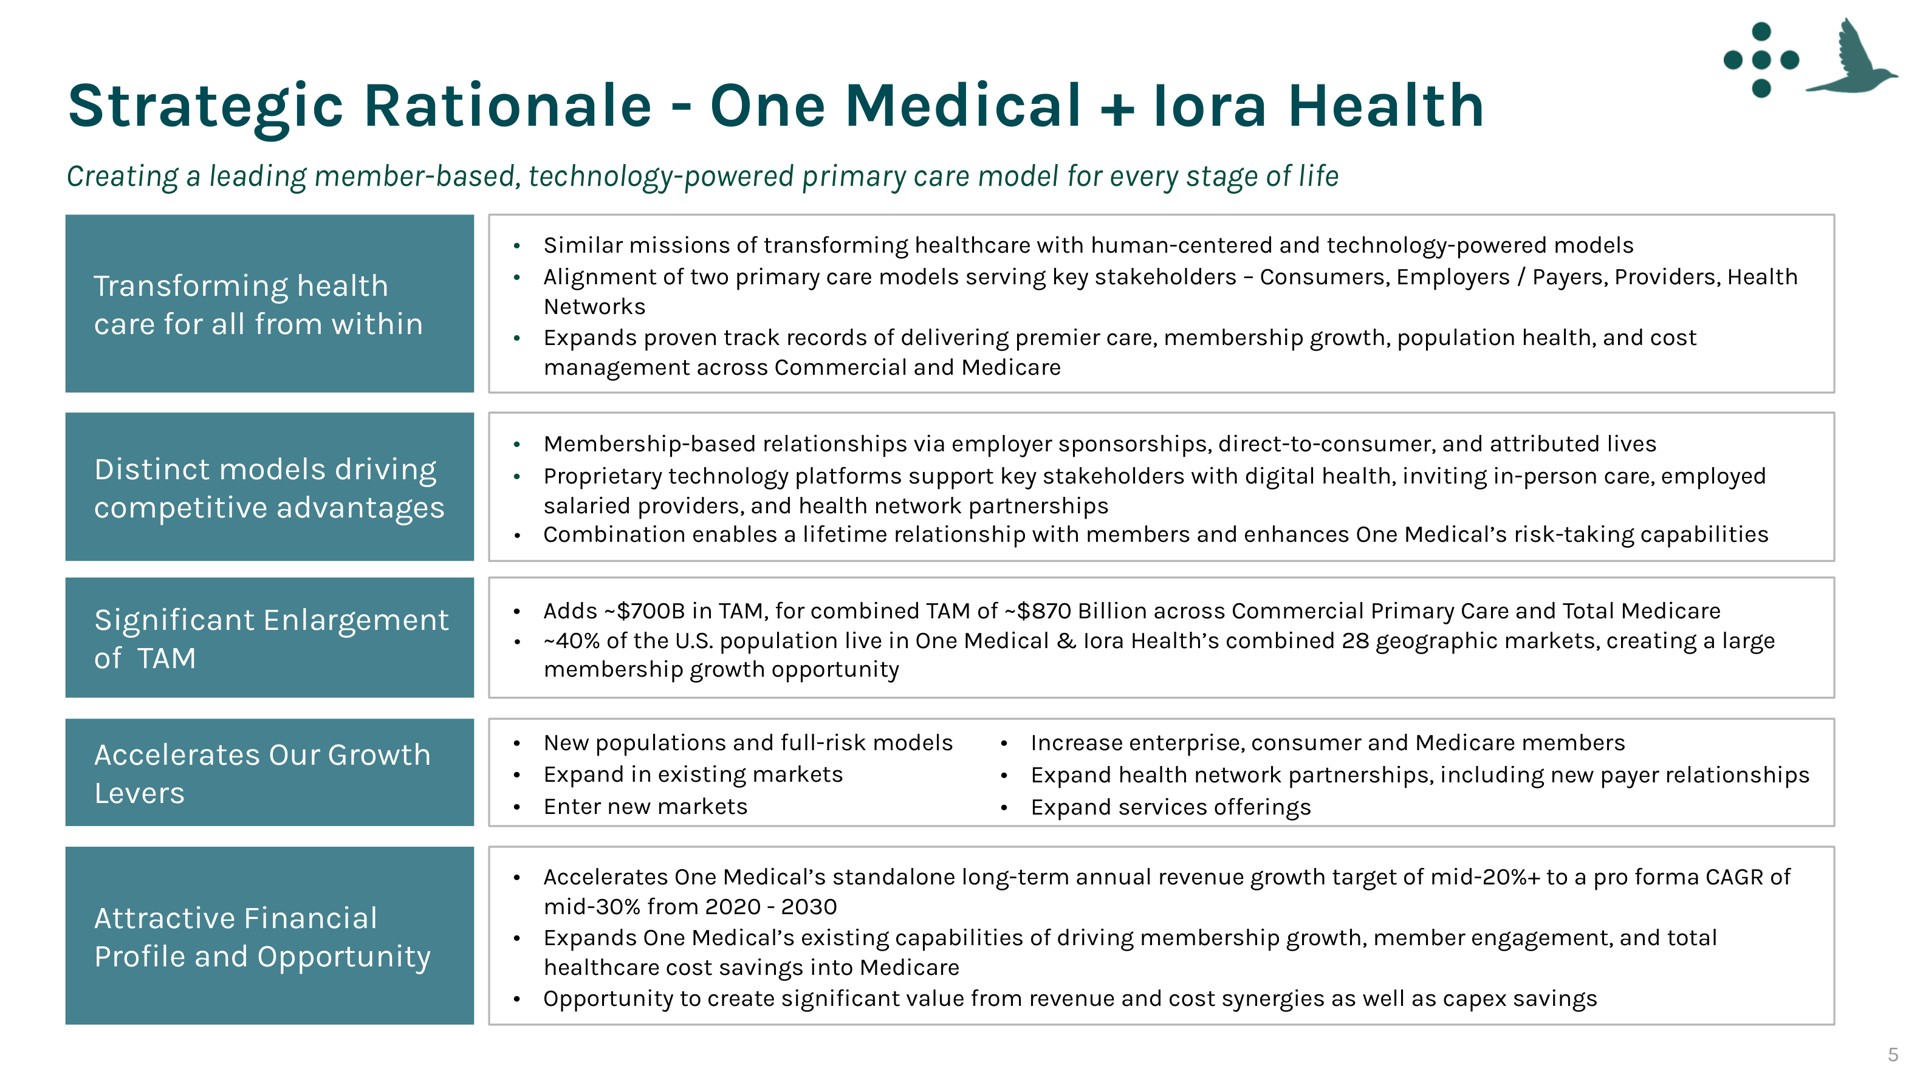 strategic rationale one medical health lora | One Medical